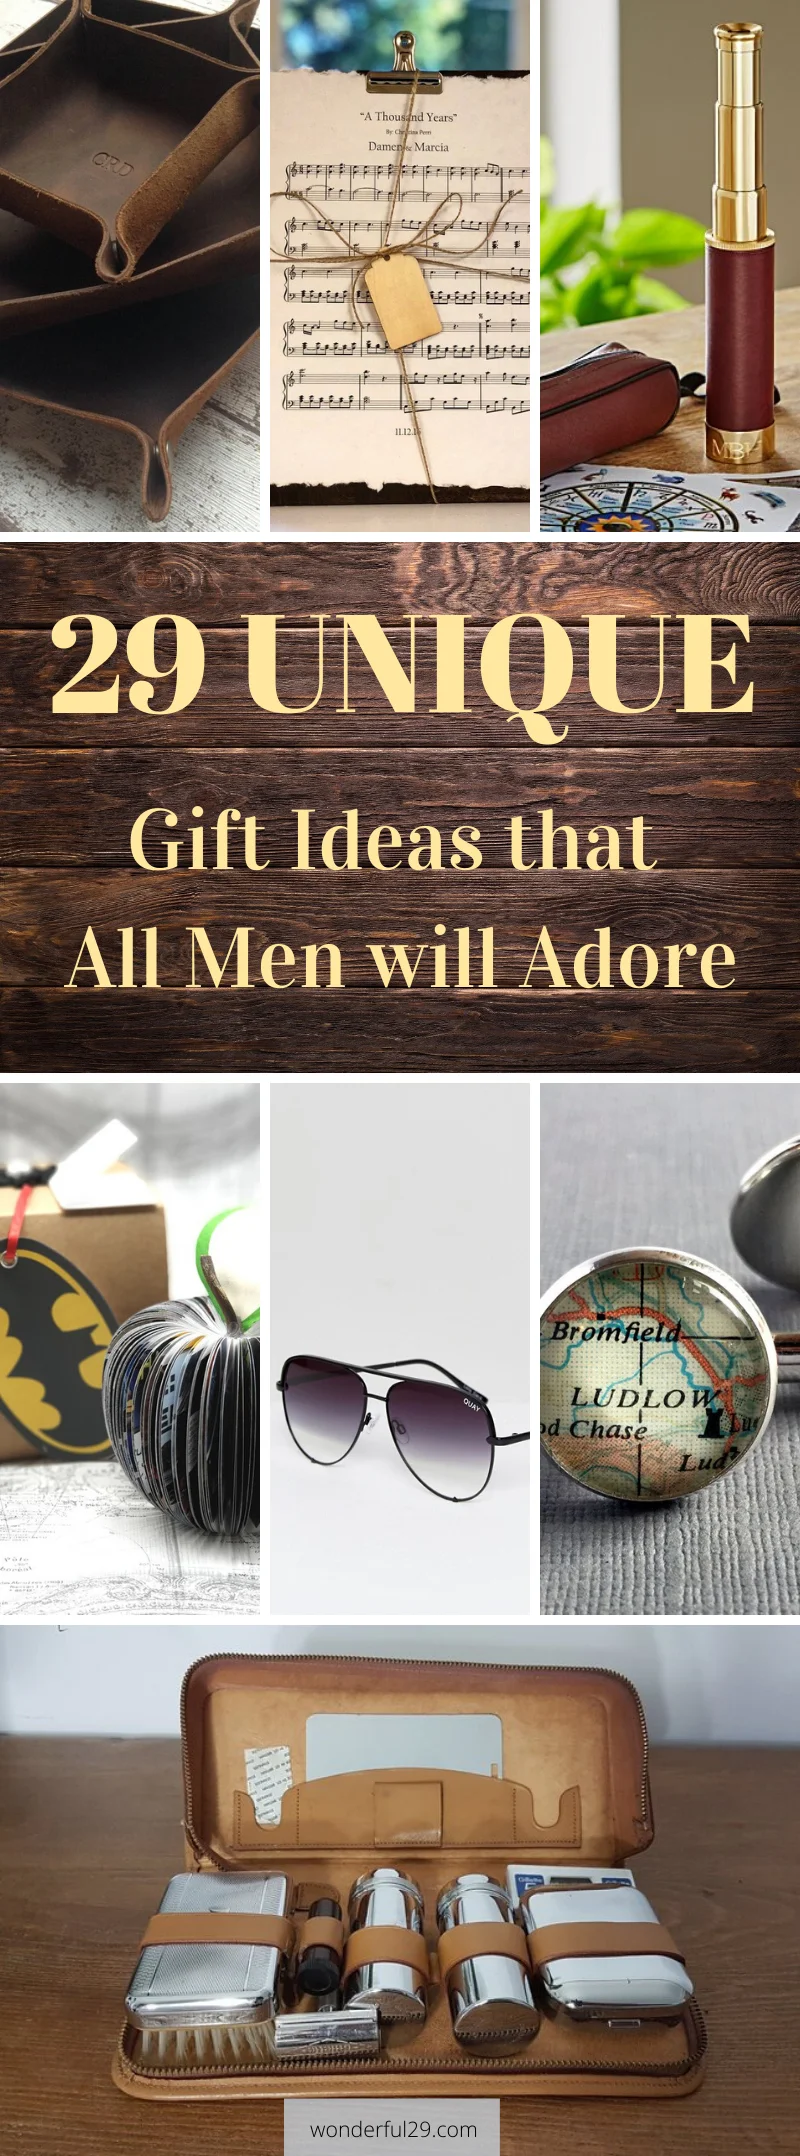 unique gifts for men w29 pinterest share.jpg